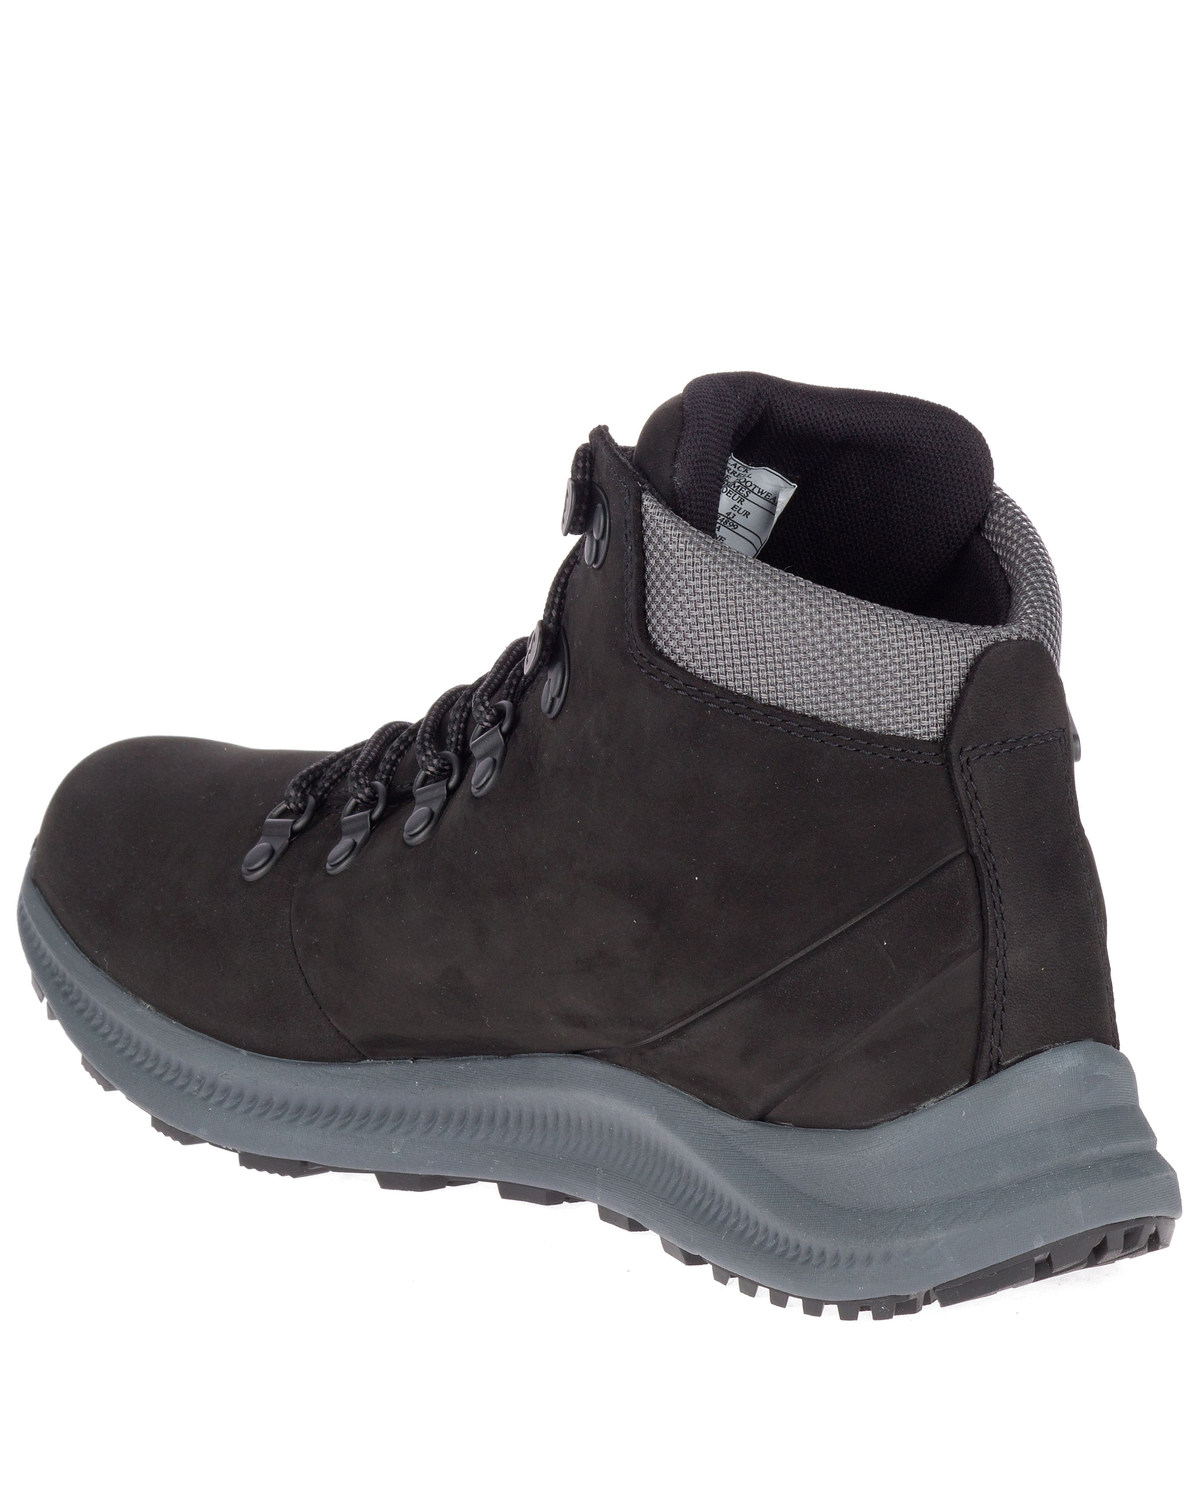 Merrell Men's Black Ontario Waterproof Hiking Boots - Soft Toe | Boot Barn